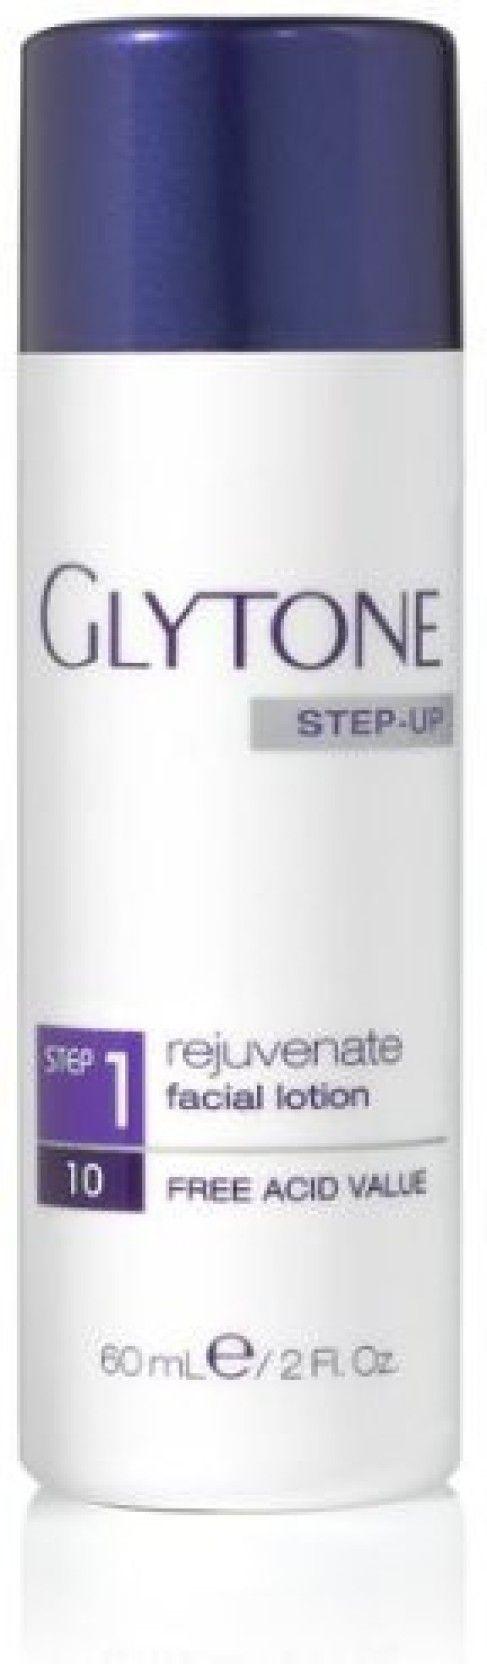 Glytone facial lotion